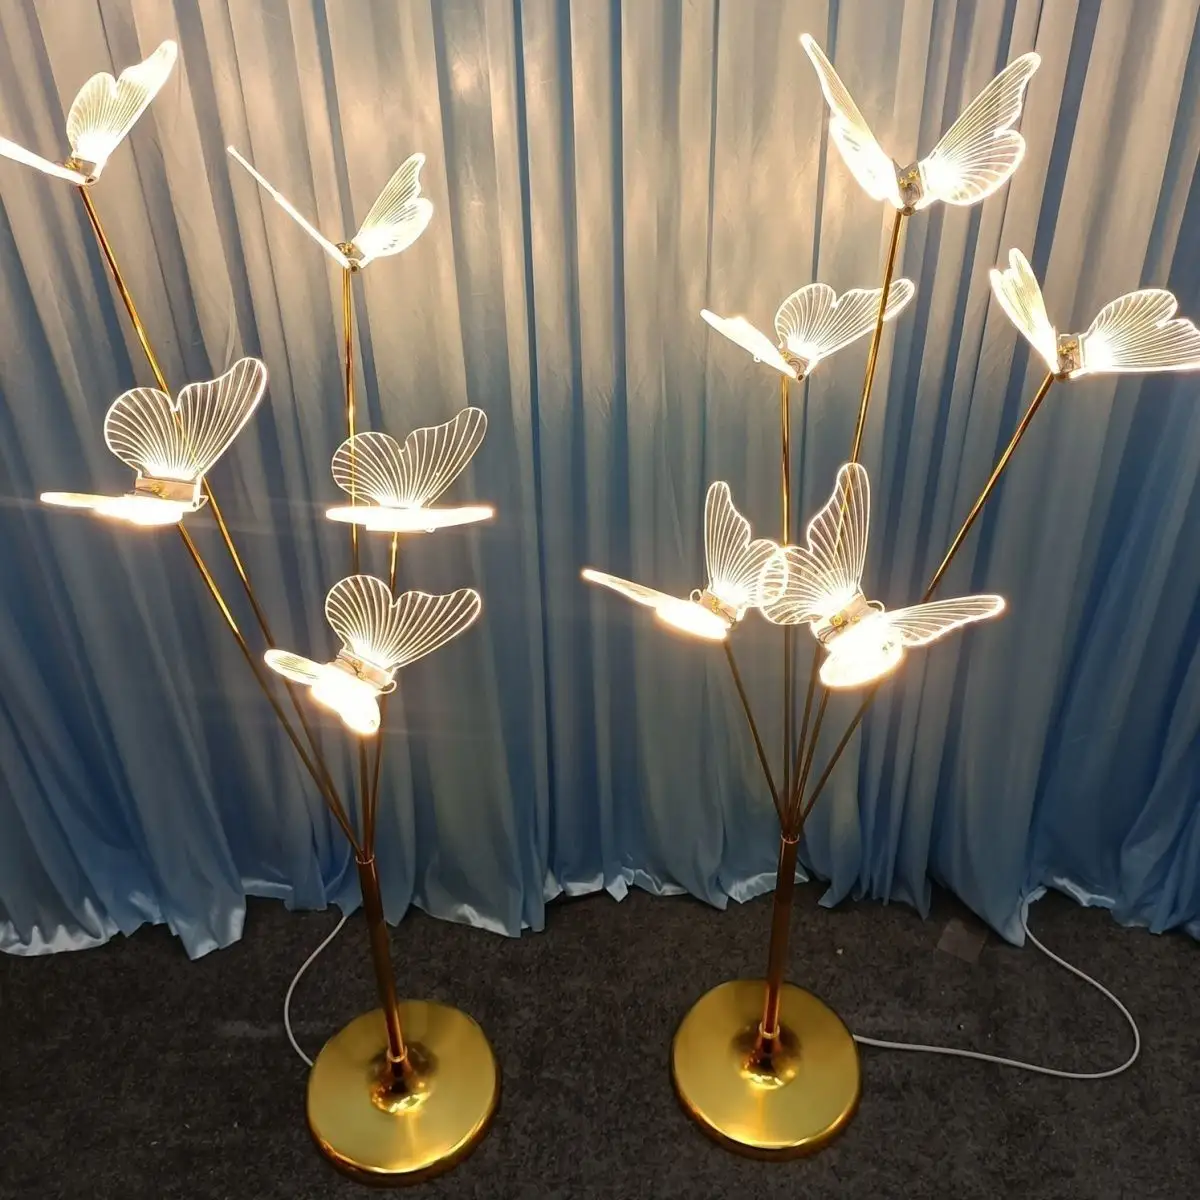 flower led lights